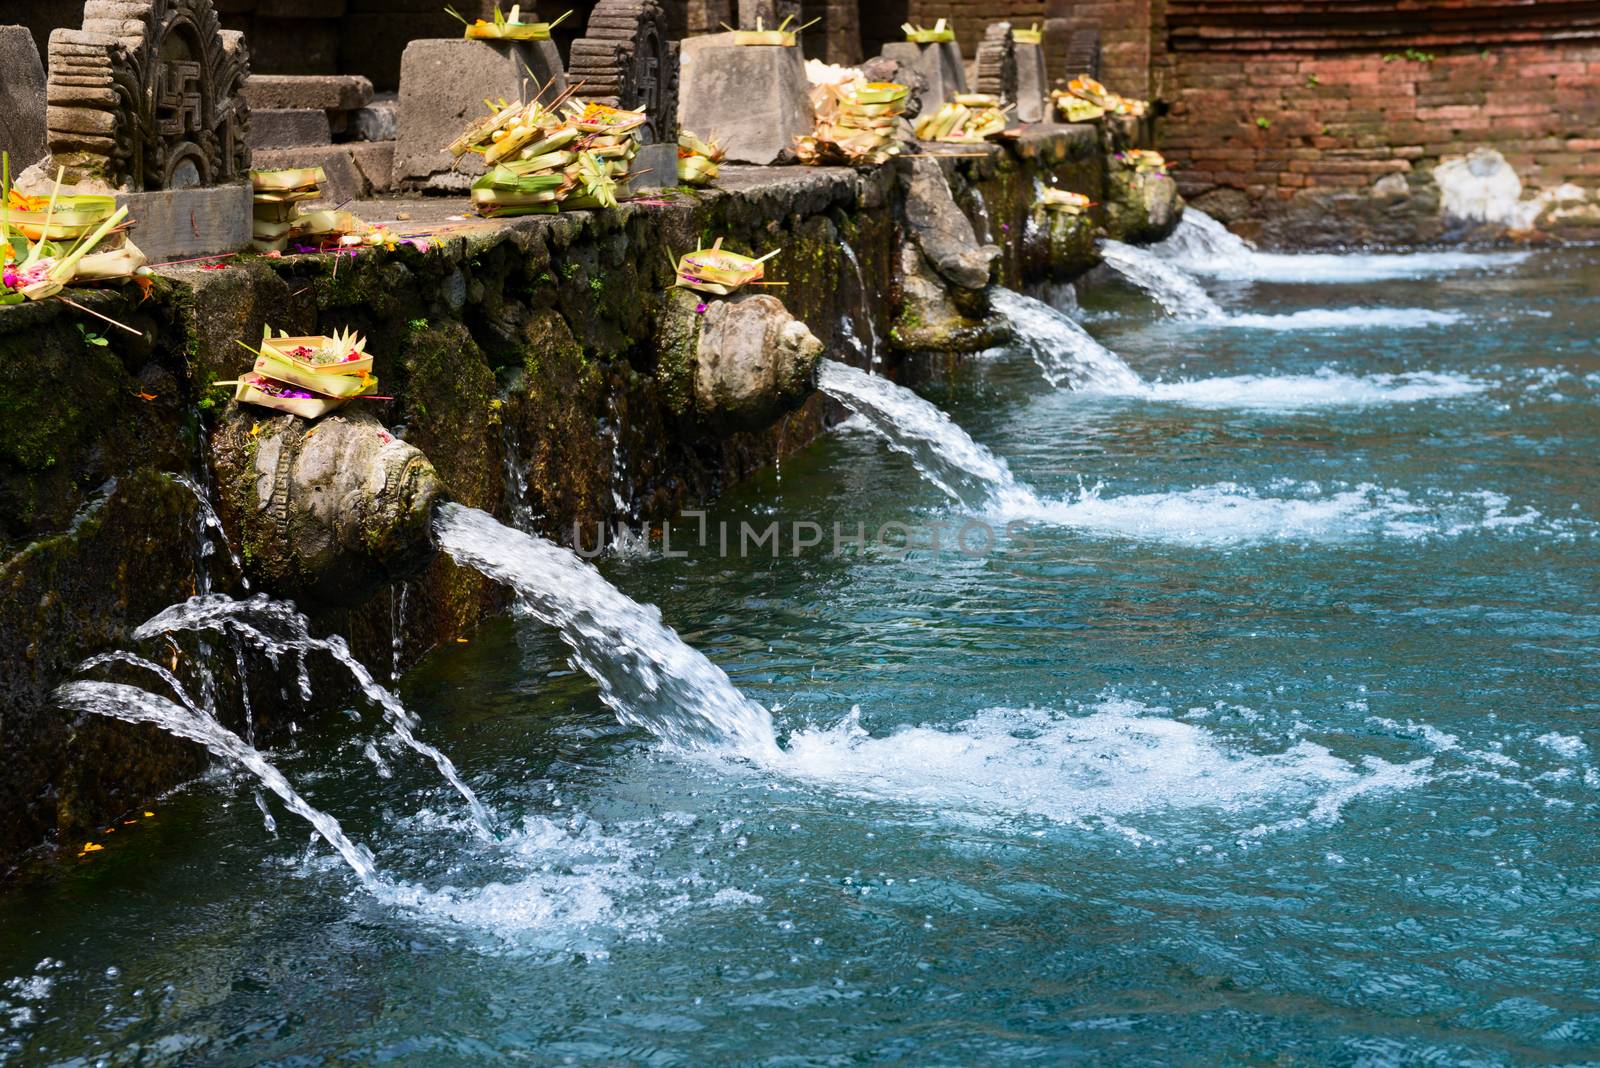  Puru Tirtha Empul Temple, Bali, Indonesia  by iryna_rasko